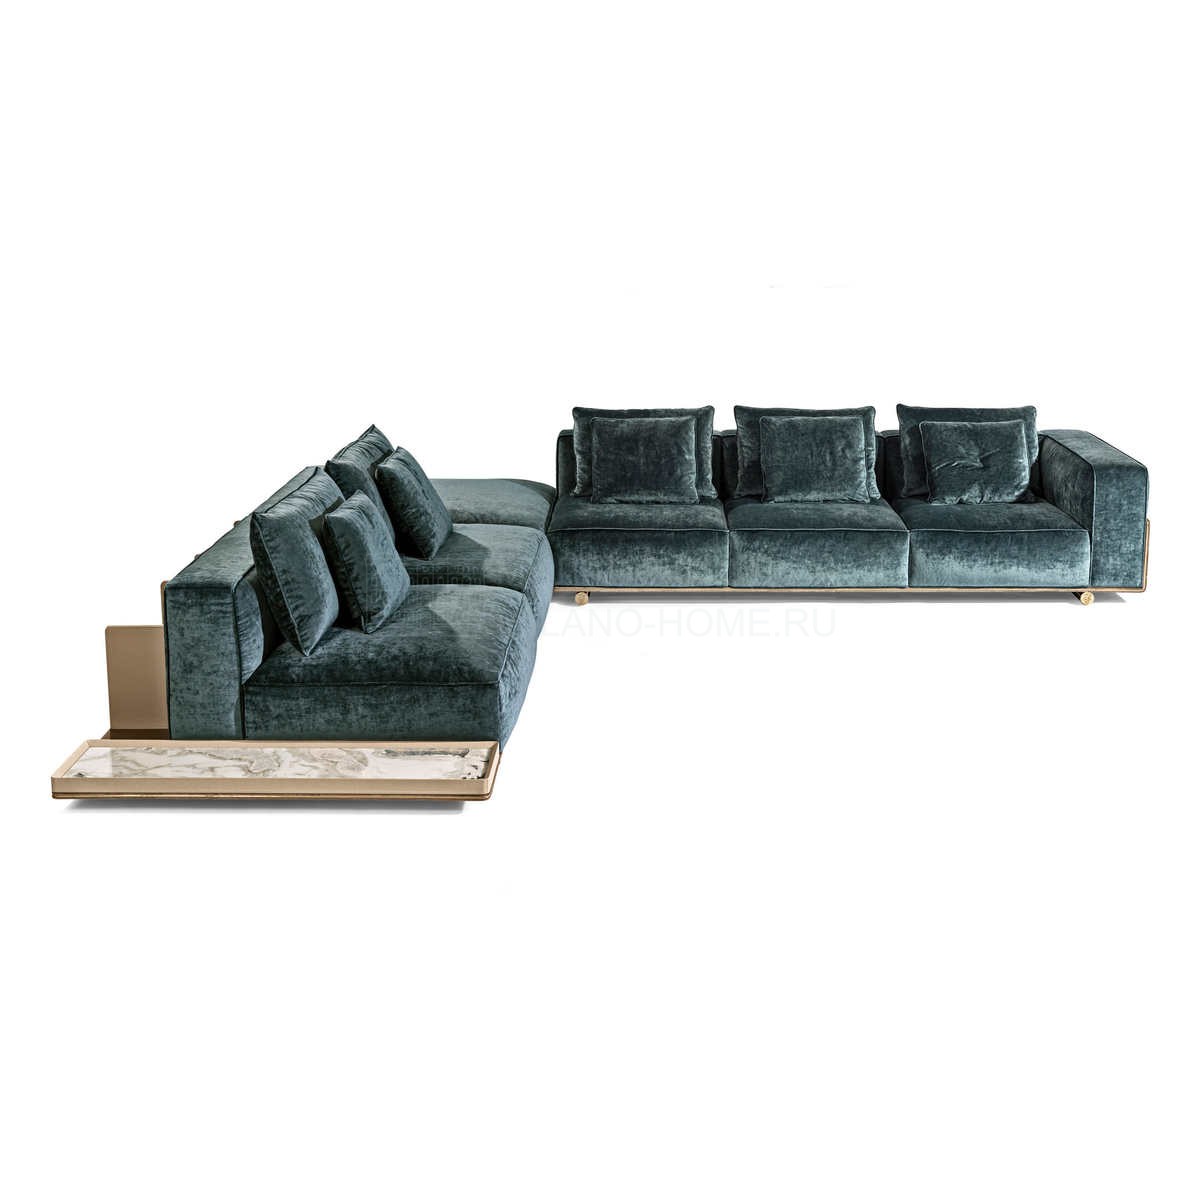 Модульный диван Donovan modular sofa из Италии фабрики IPE CAVALLI VISIONNAIRE